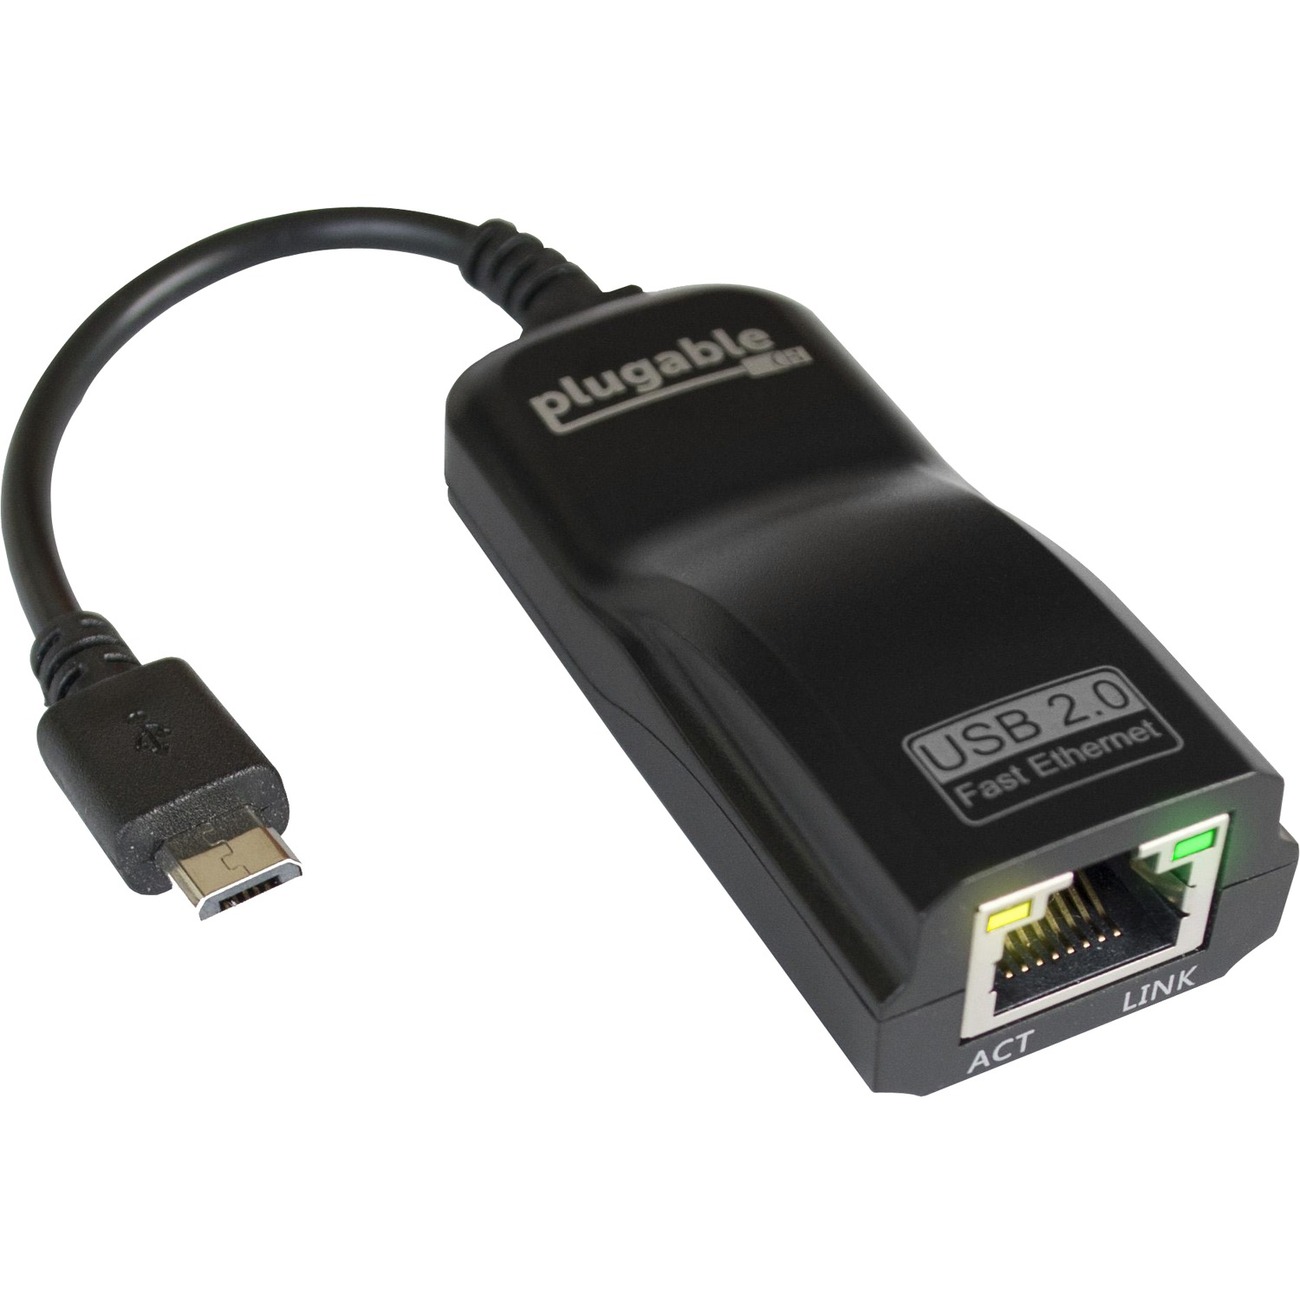 100mbps Ethernet USB Adapter. 214.5.104.208 Адаптер Ethernet. Микро юсб RJ 45. ASUS USB Ethernet Adapter. Купить адаптер м2